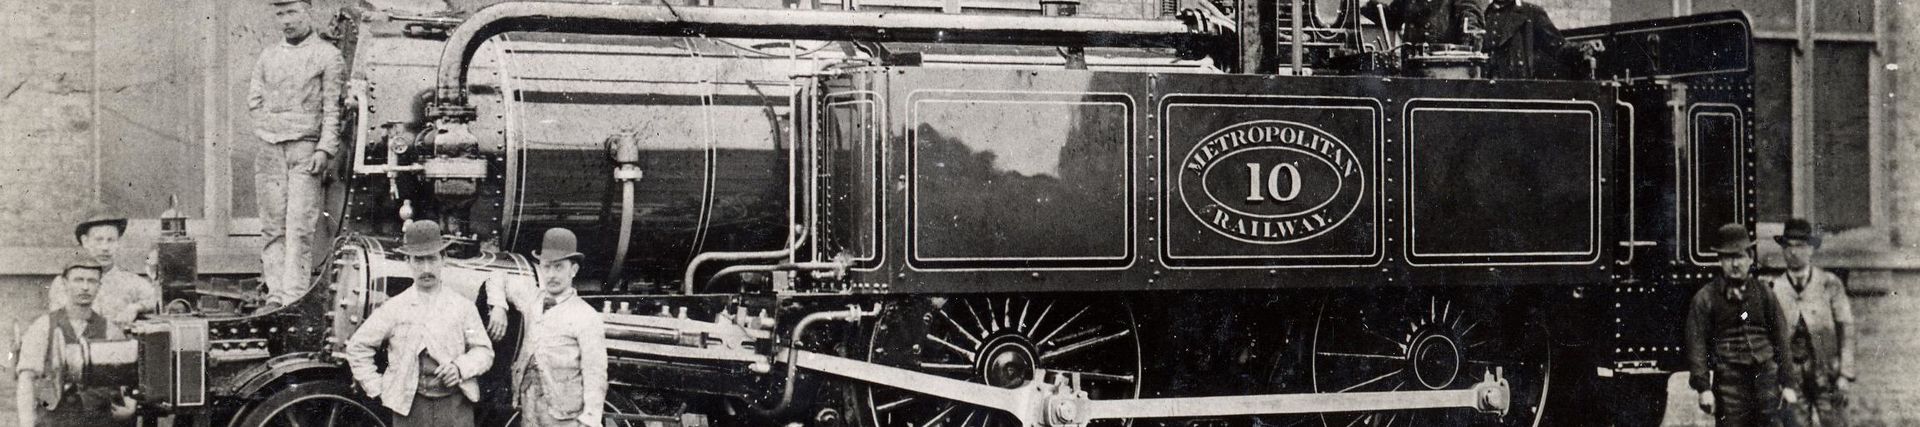 Metropolitan A-class locomotive no 10 (Cerberus) of 1864